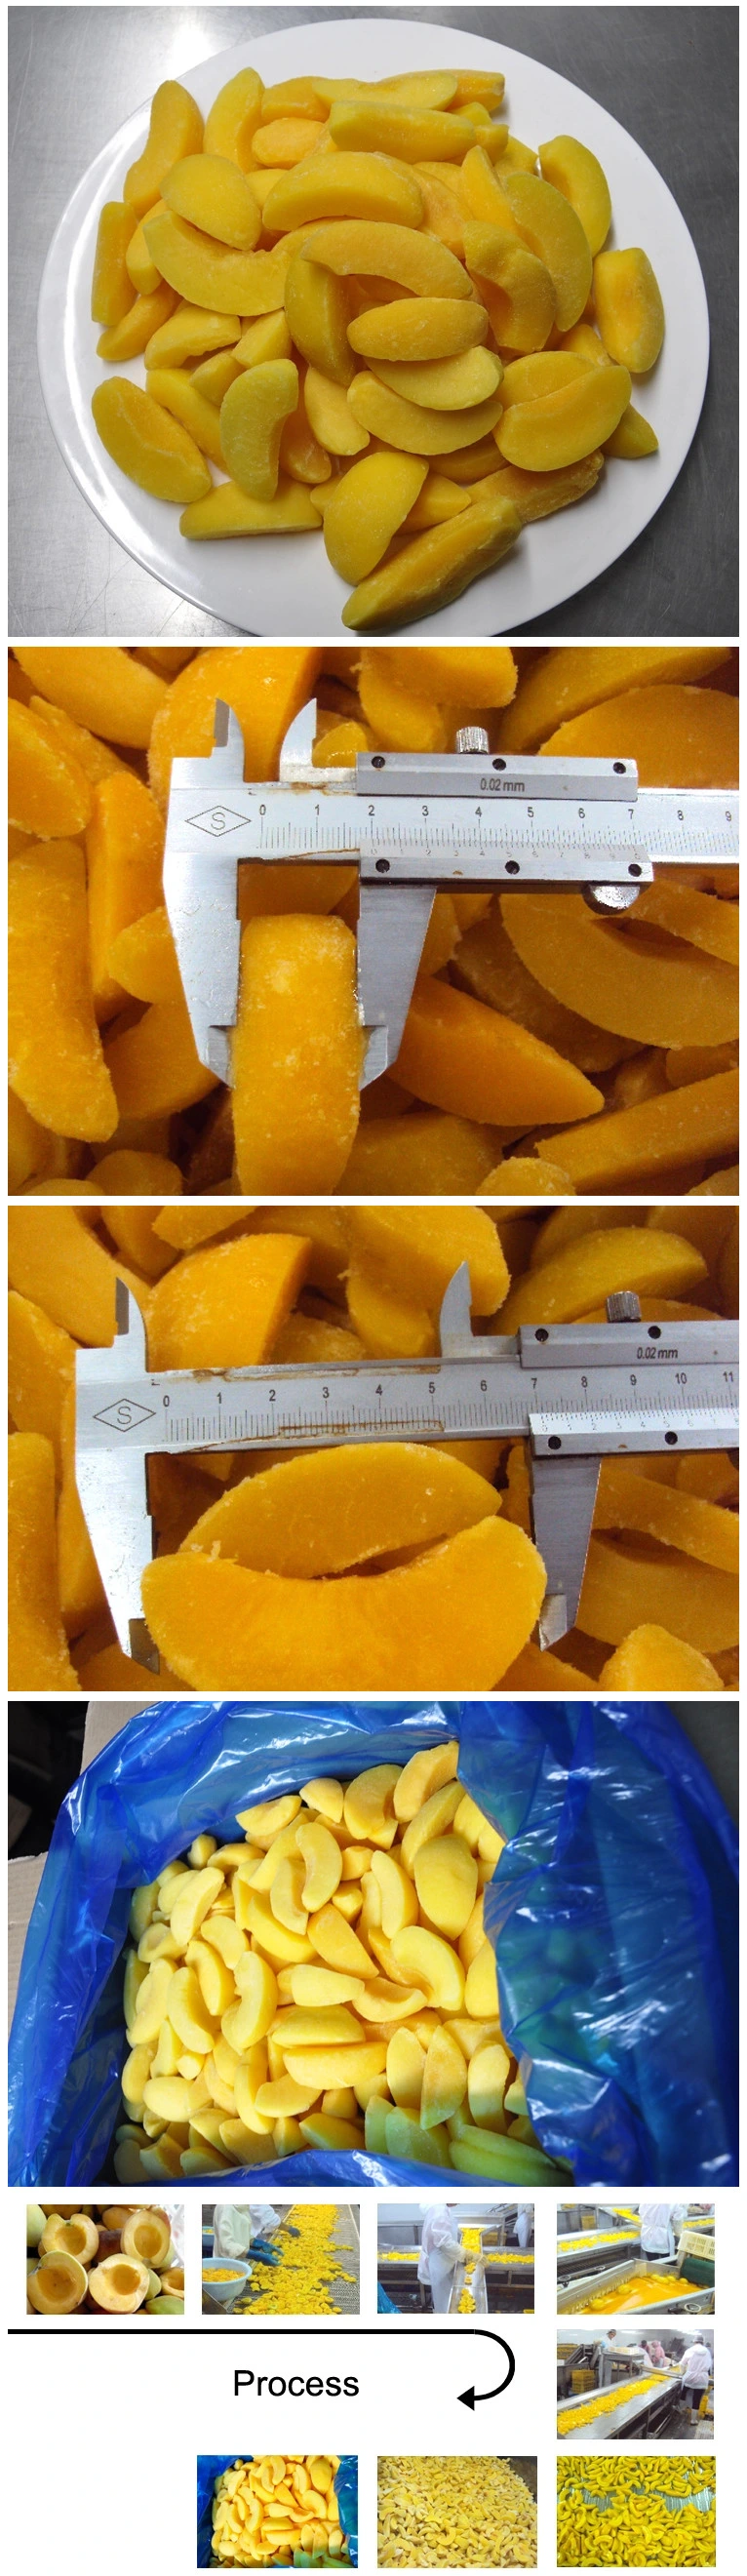 Frozen Yellow Peaches Peach Yellow Peach Price Best Quality Supply Good IQF Frozen Yellow Peaches